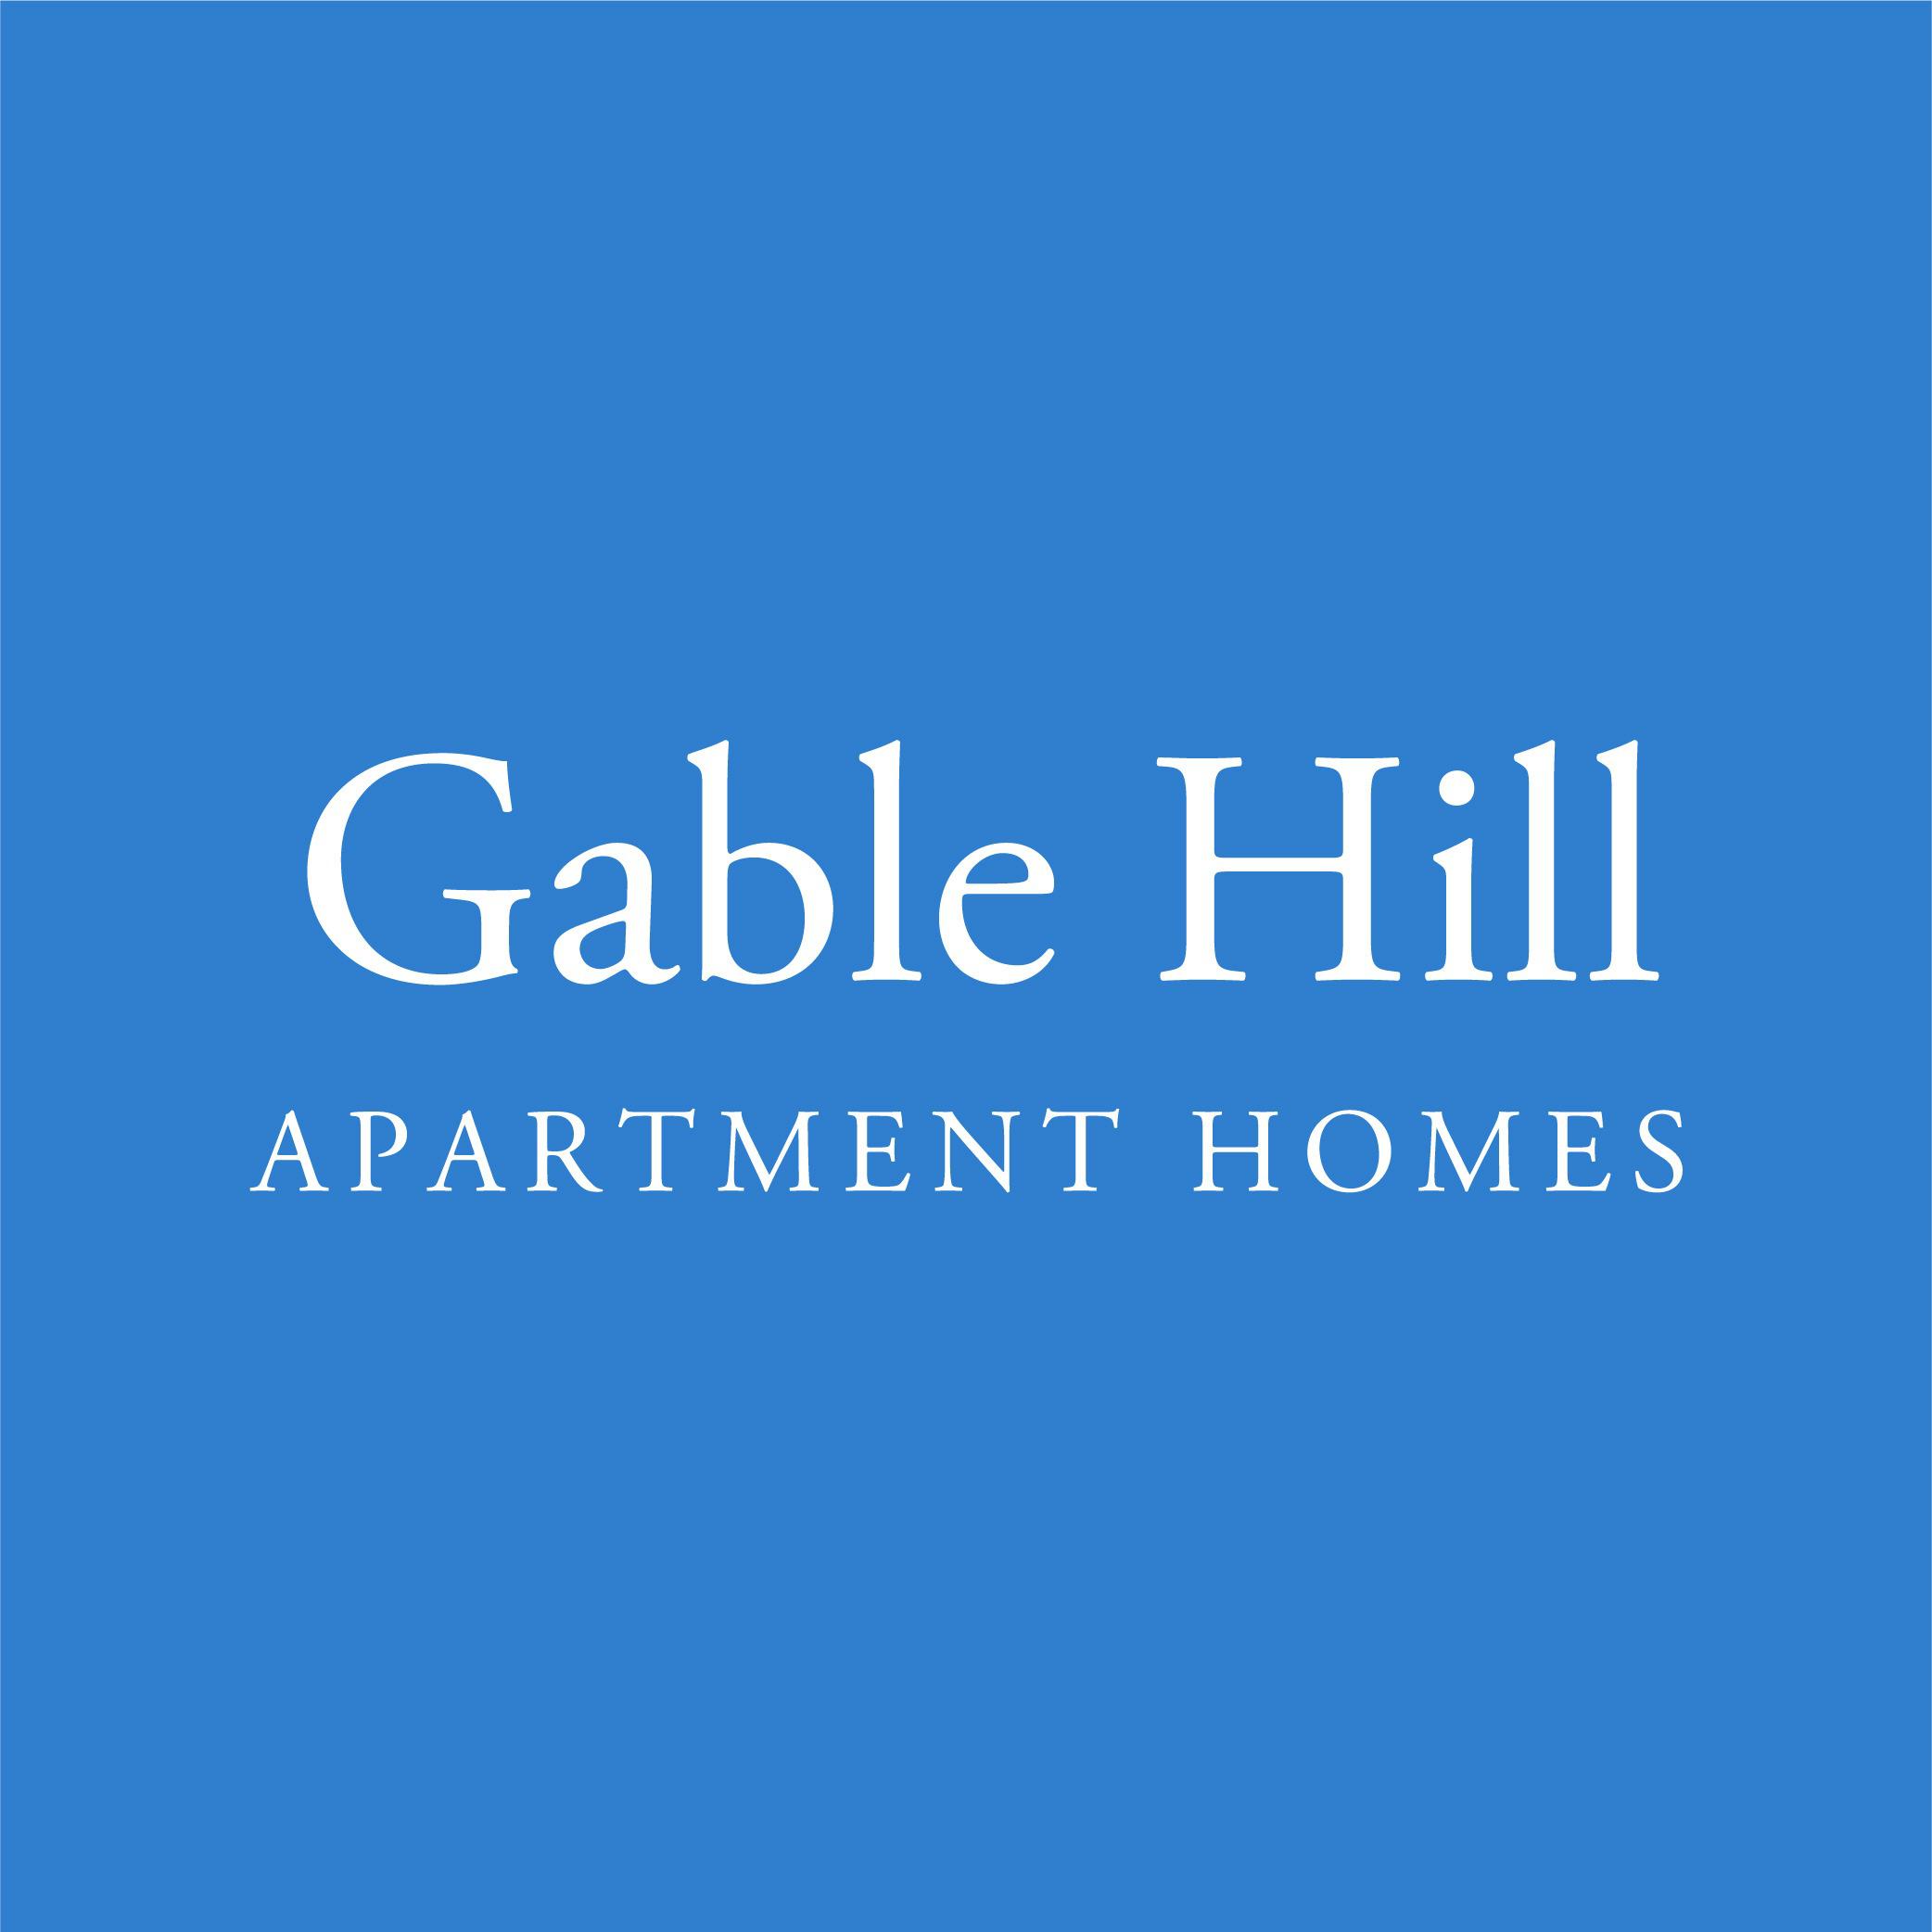 Gable Hill Apartment Homes | Powerlisting